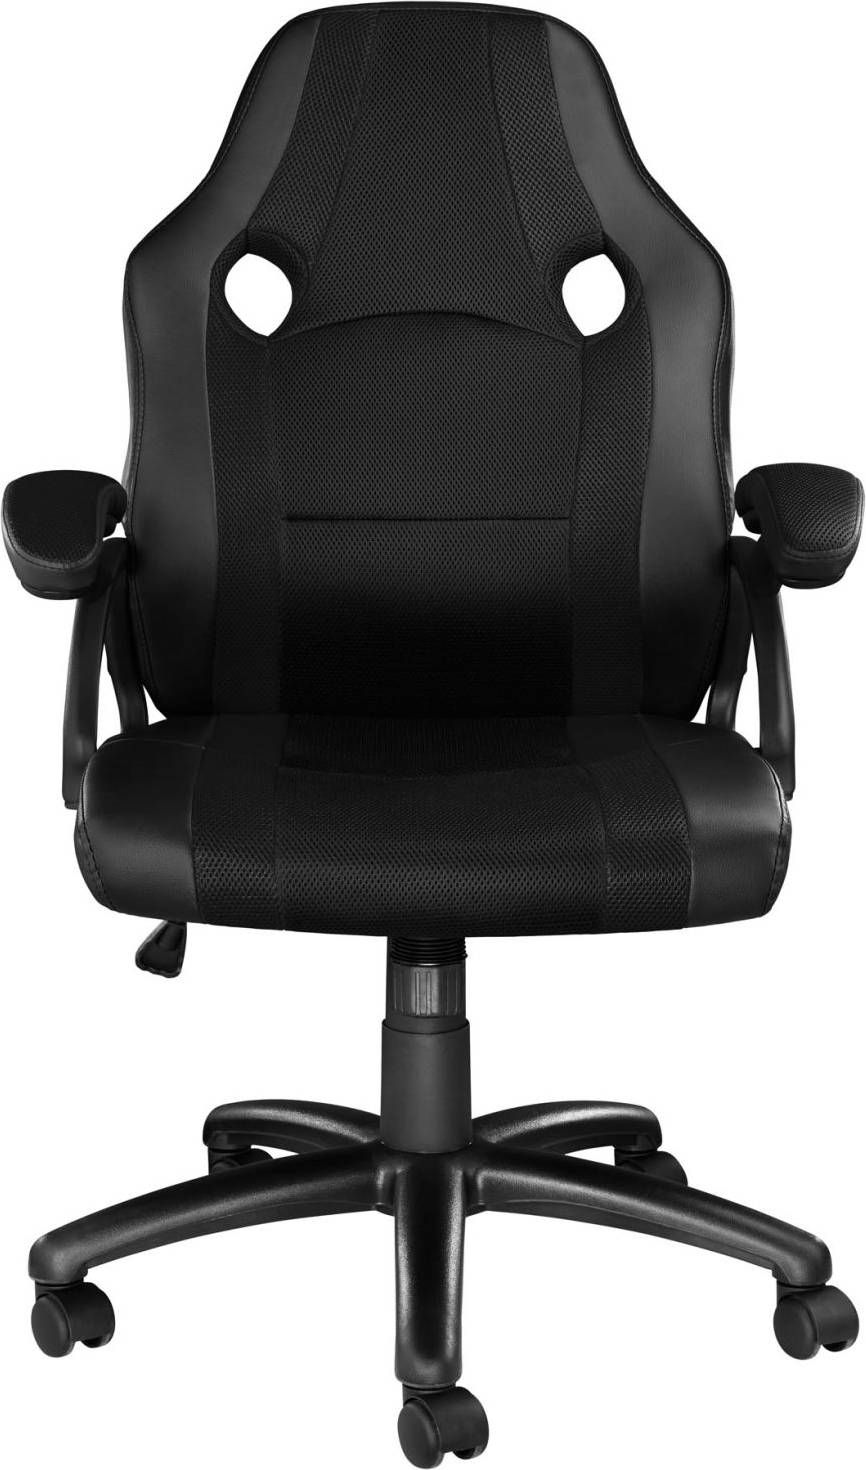  Bild på tectake Benny Gaming Chair - Black gamingstol